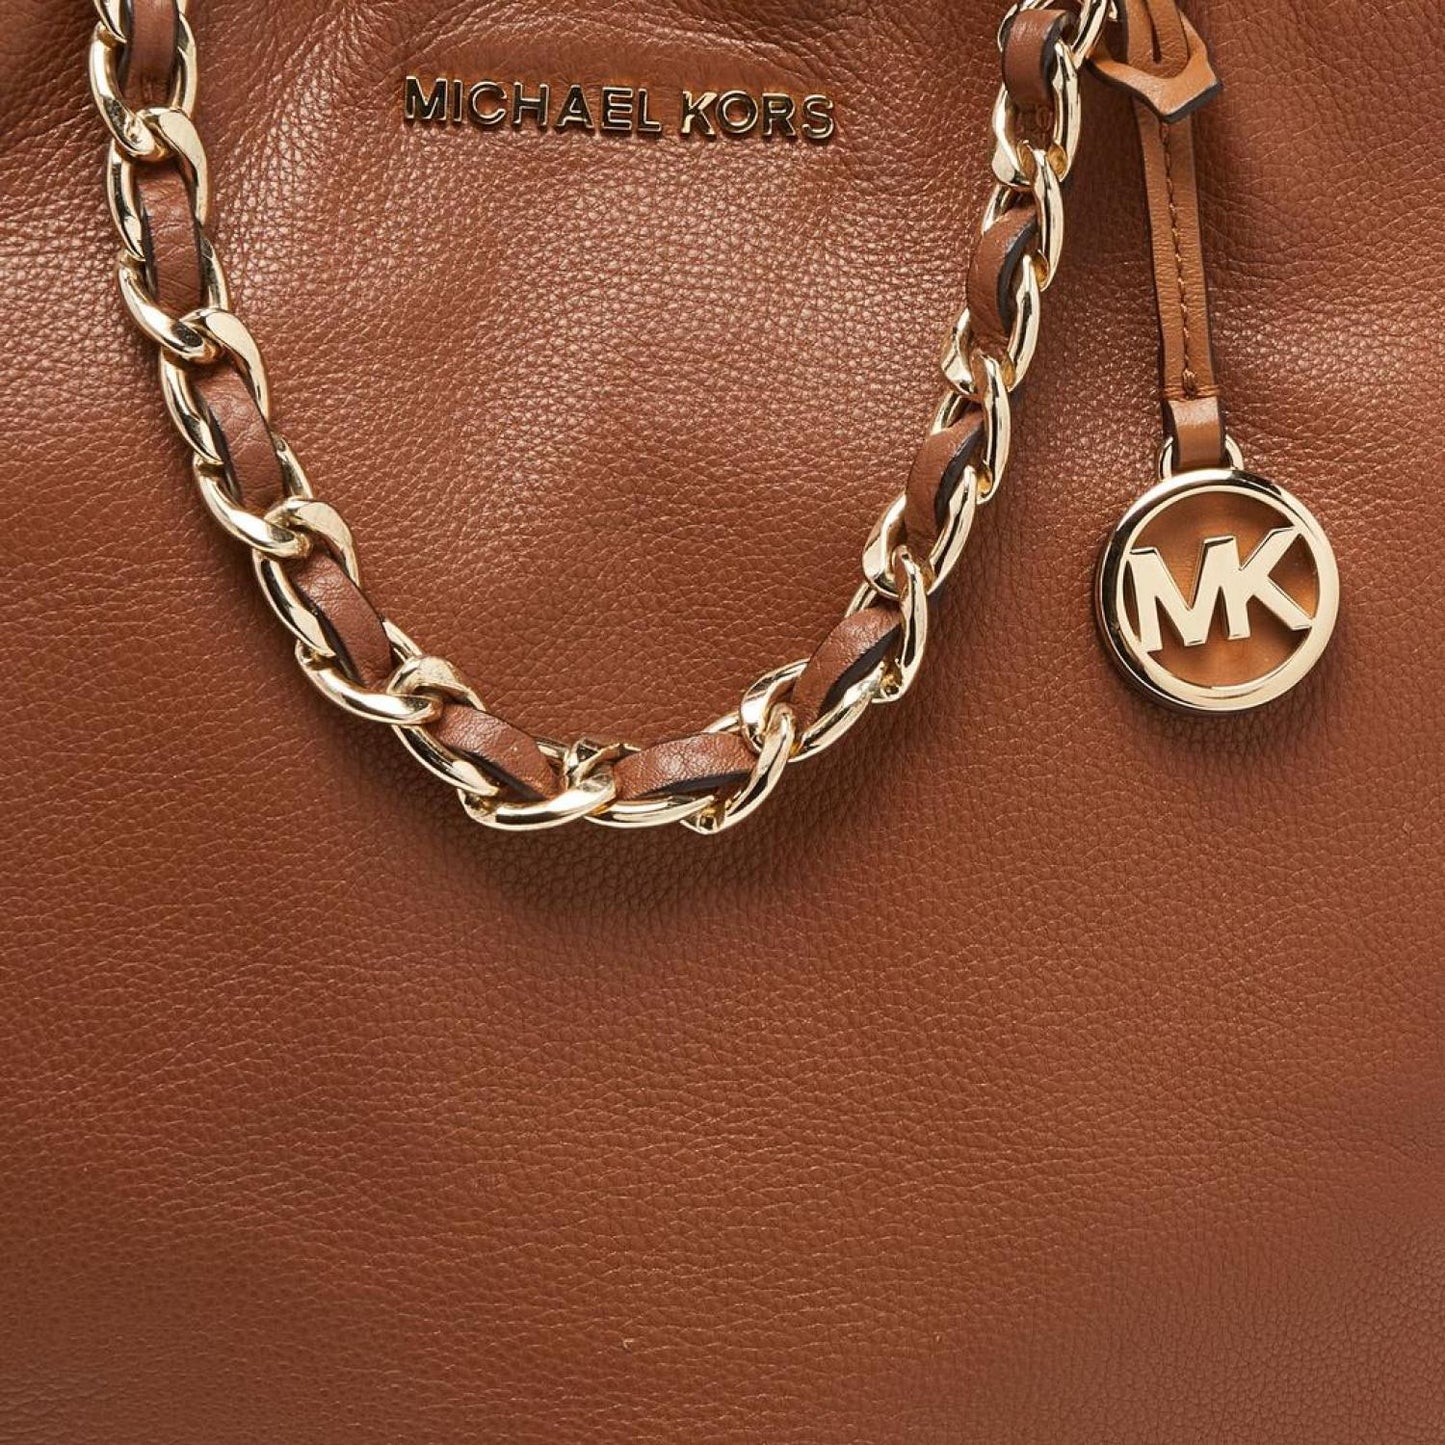 Michael Michael Kors Leather Chain Tote